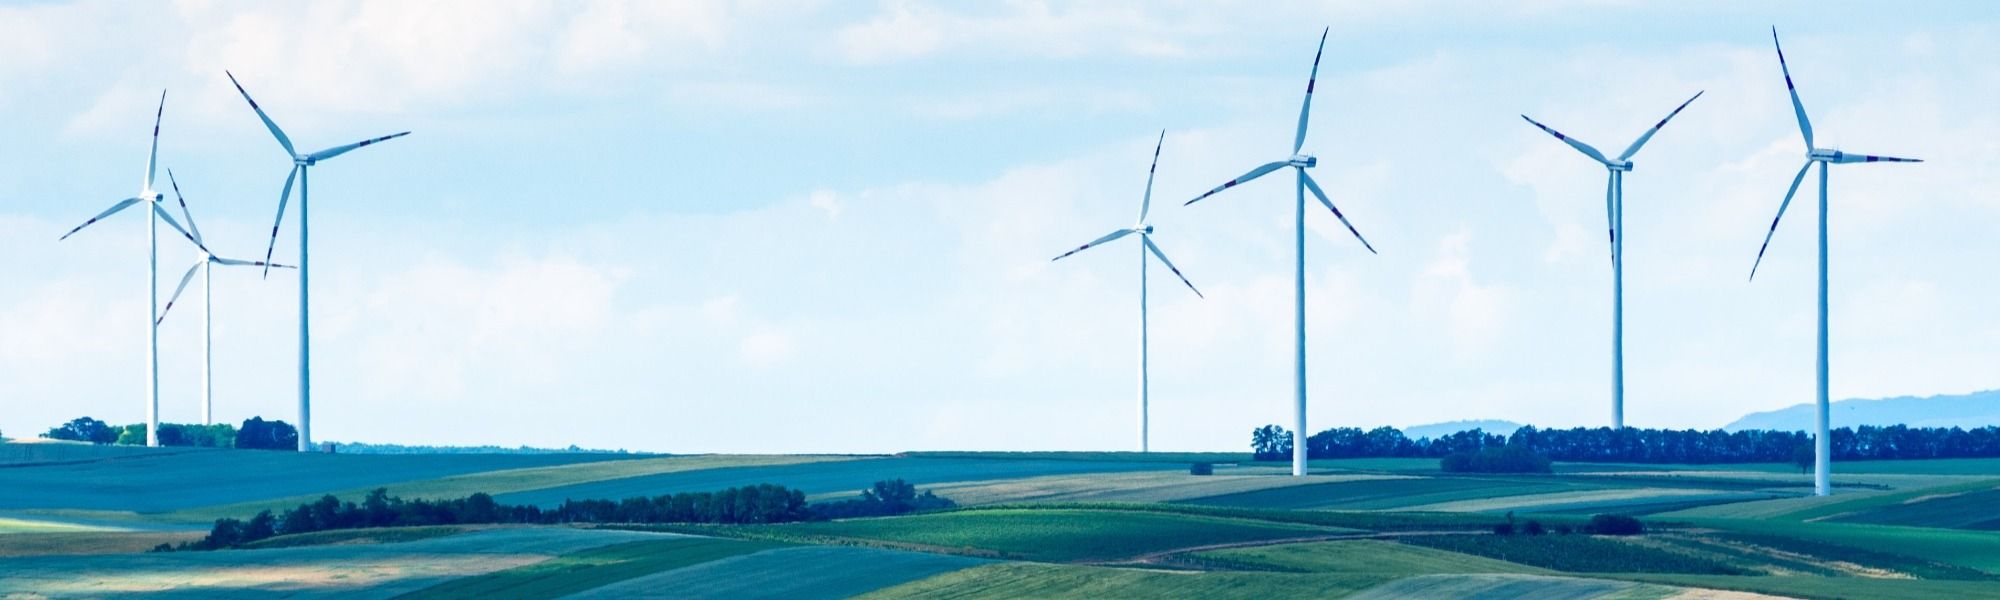 wind power turbines renewable energy